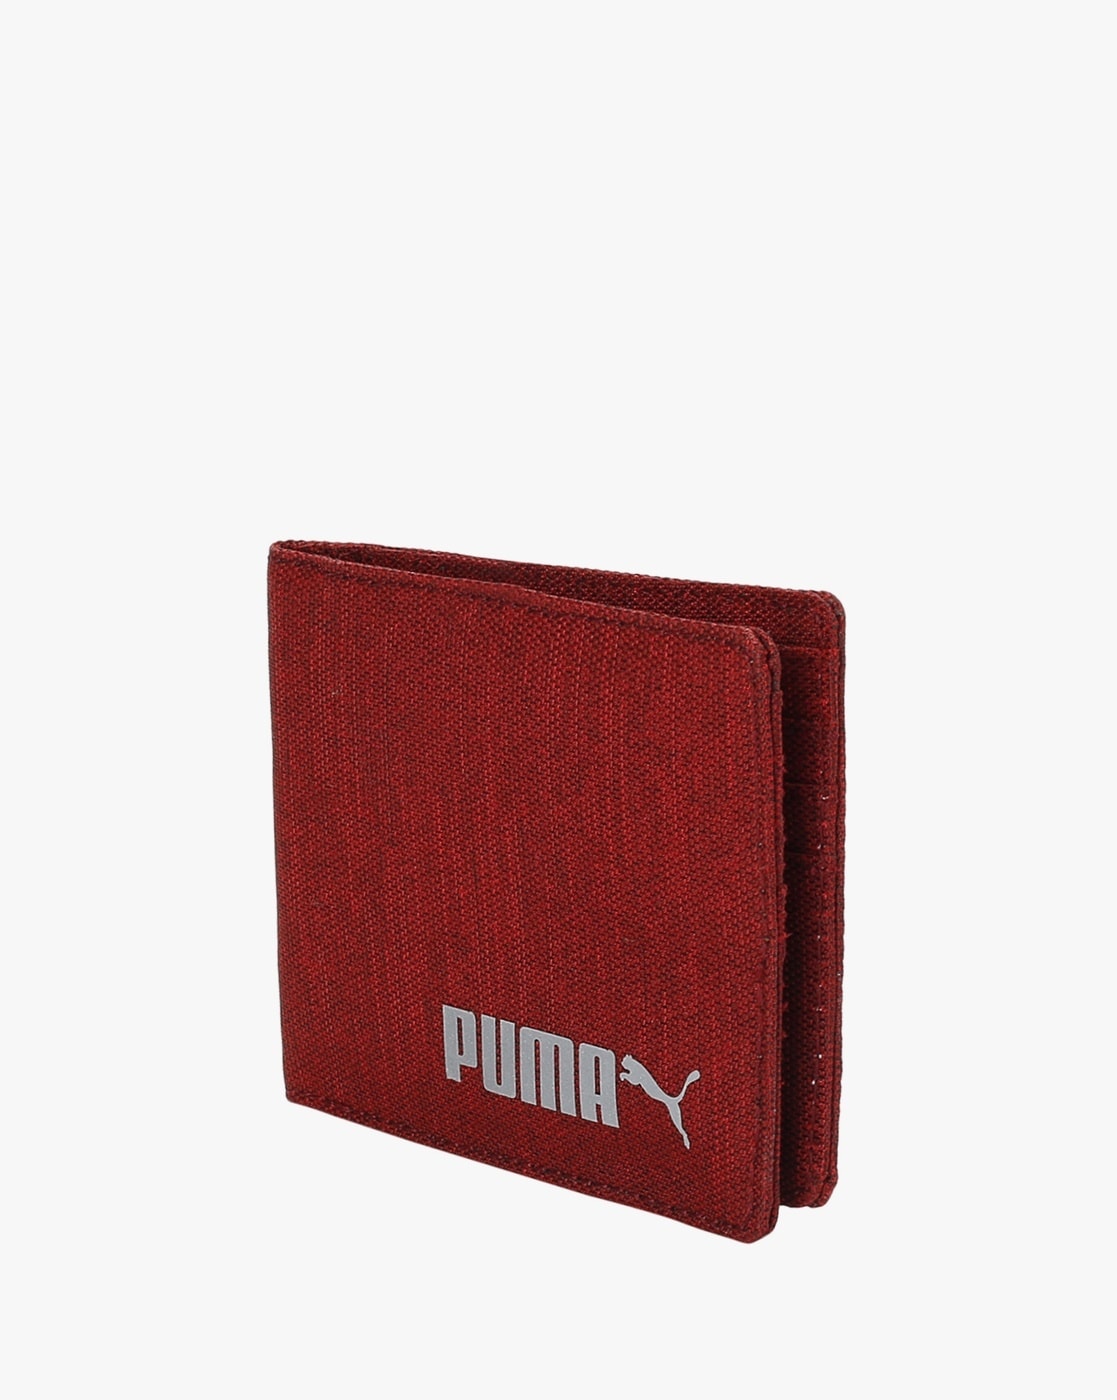 100% Brand New Authentic Puma Ferrari Bifold Leather Men Wallet || Gift ||  CROSS | eBay